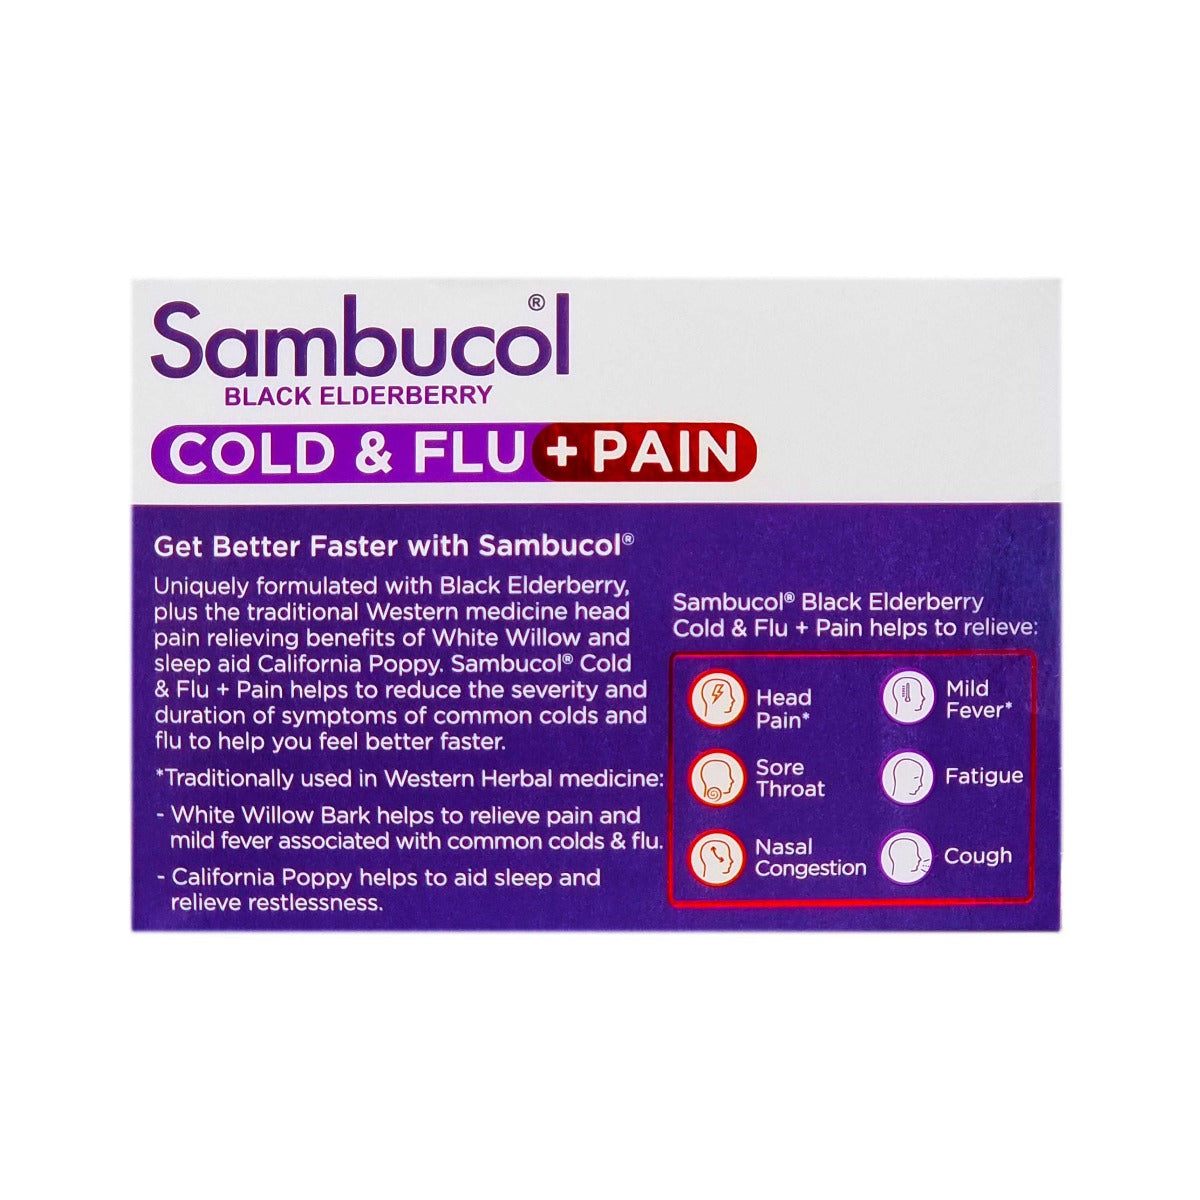 Sambucol Black Elderberry Cold & Flu + Pain Relief Capsules 24's